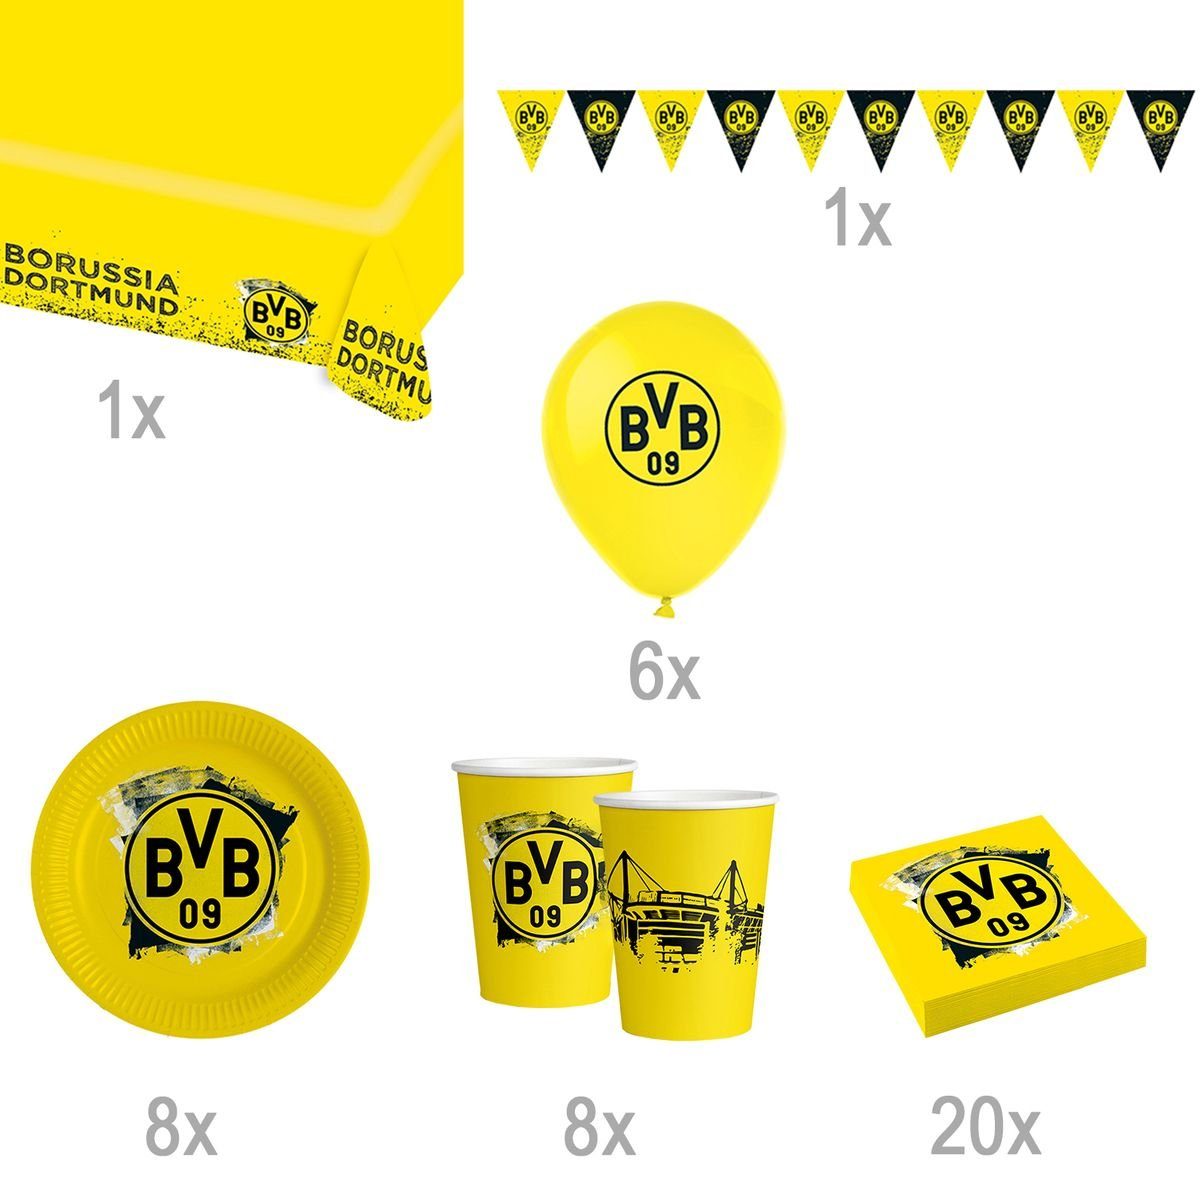 Party Dortmund Papierdekoration Deko BVB Borussia Set Amscan